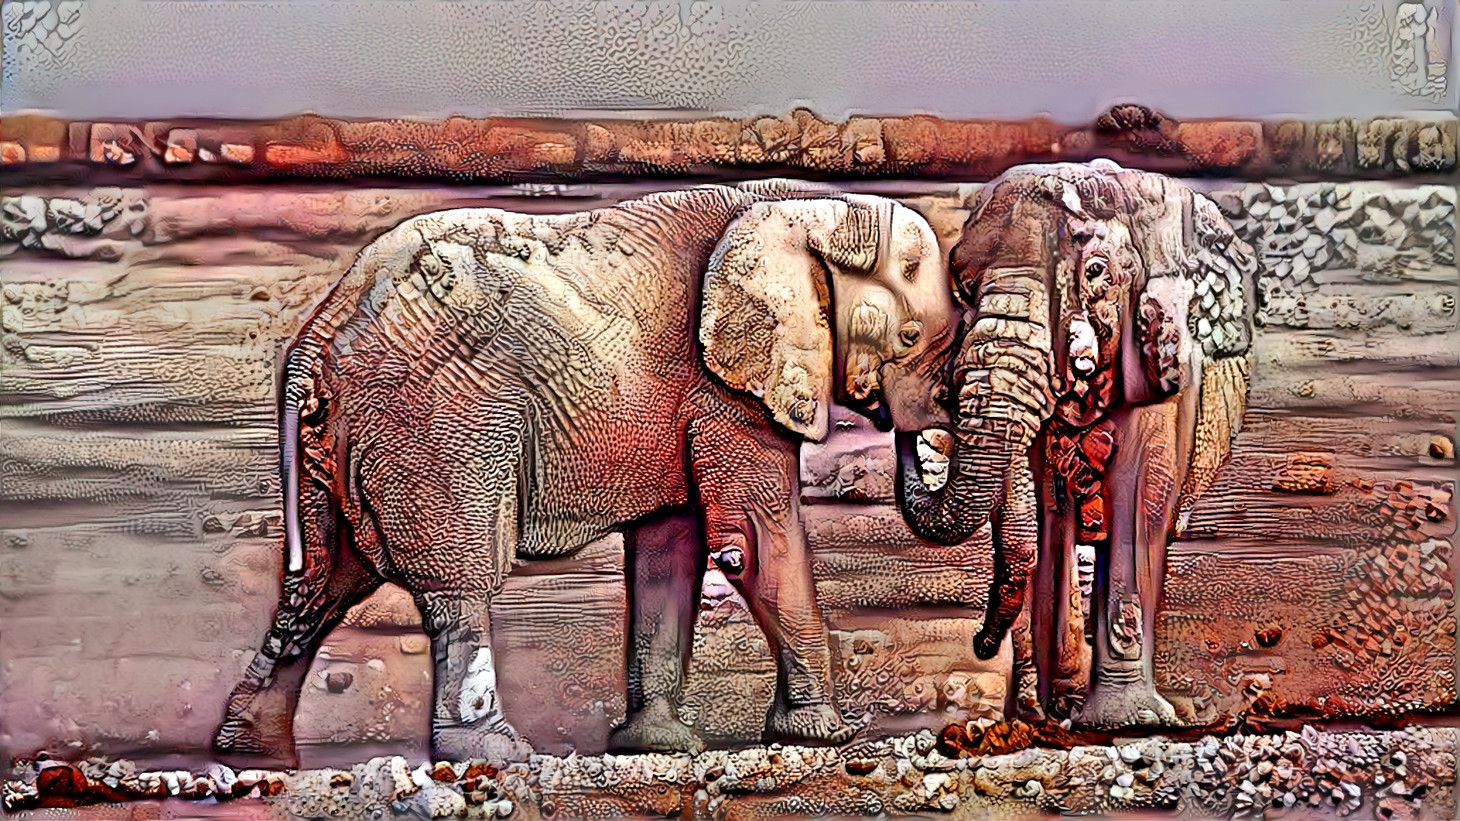 Best Friends - desert elephants Namibia (Image by kolibri5 from Pixabay)